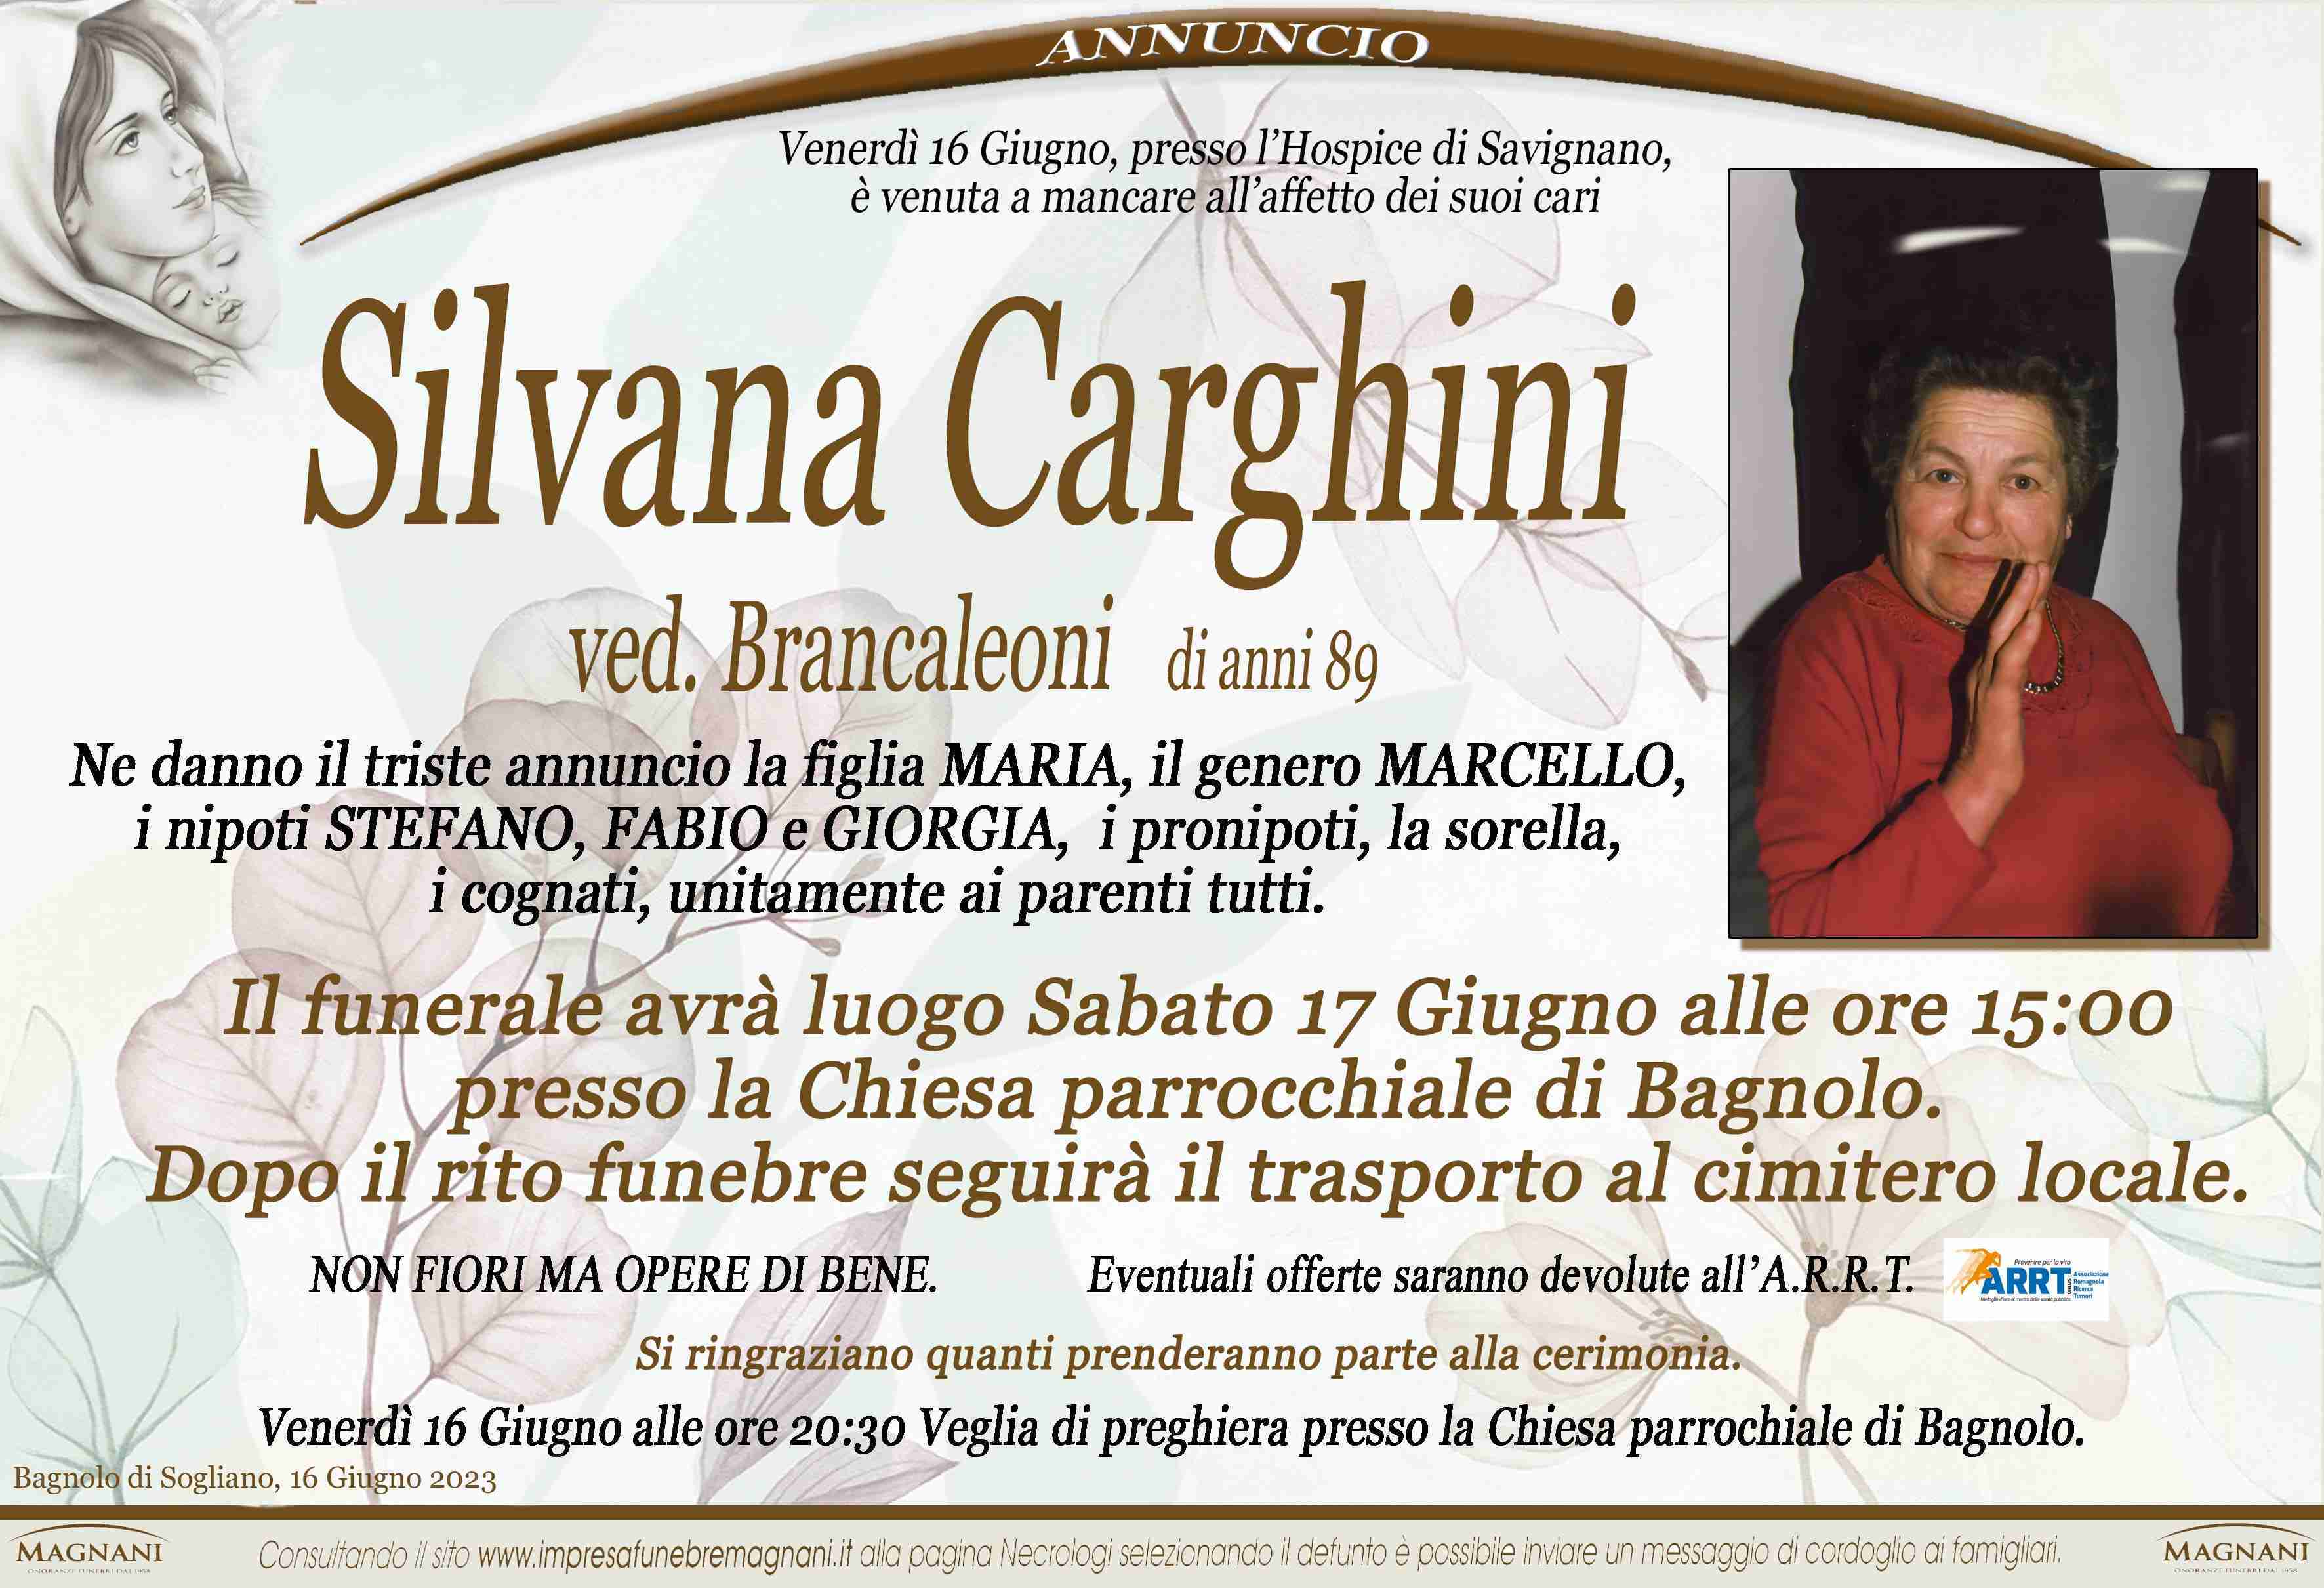 Silvana Carghini